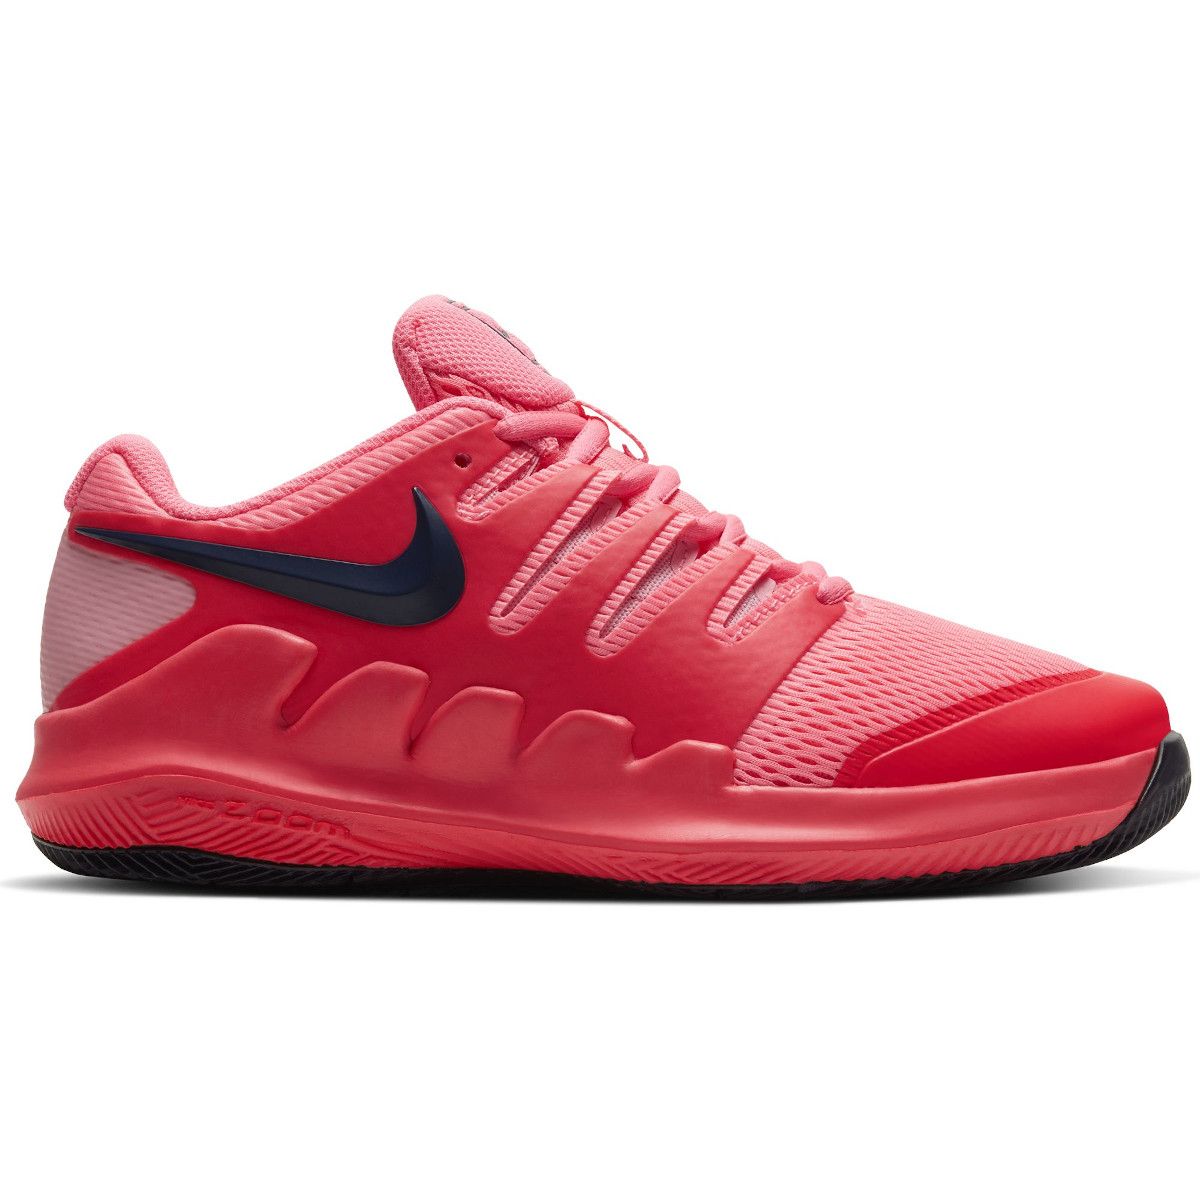 NikeCourt Vapor X Junior Tennis Shoes AR8851-604